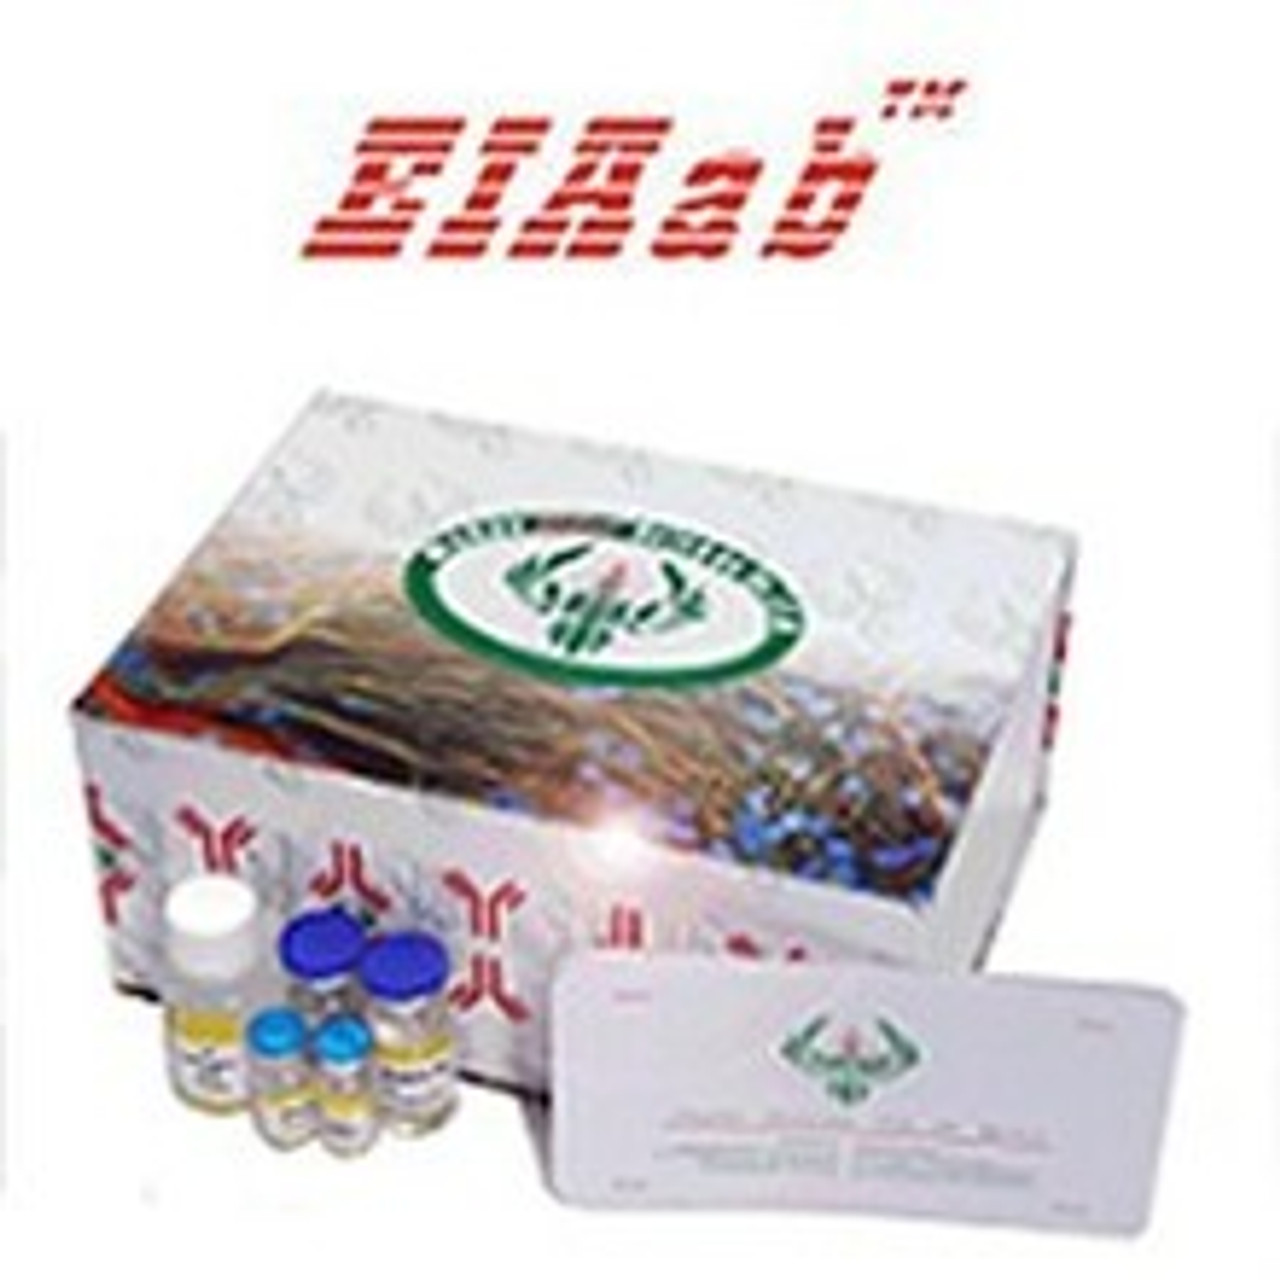 Human SFN/14-3-3 protein sigma ELISA Kit